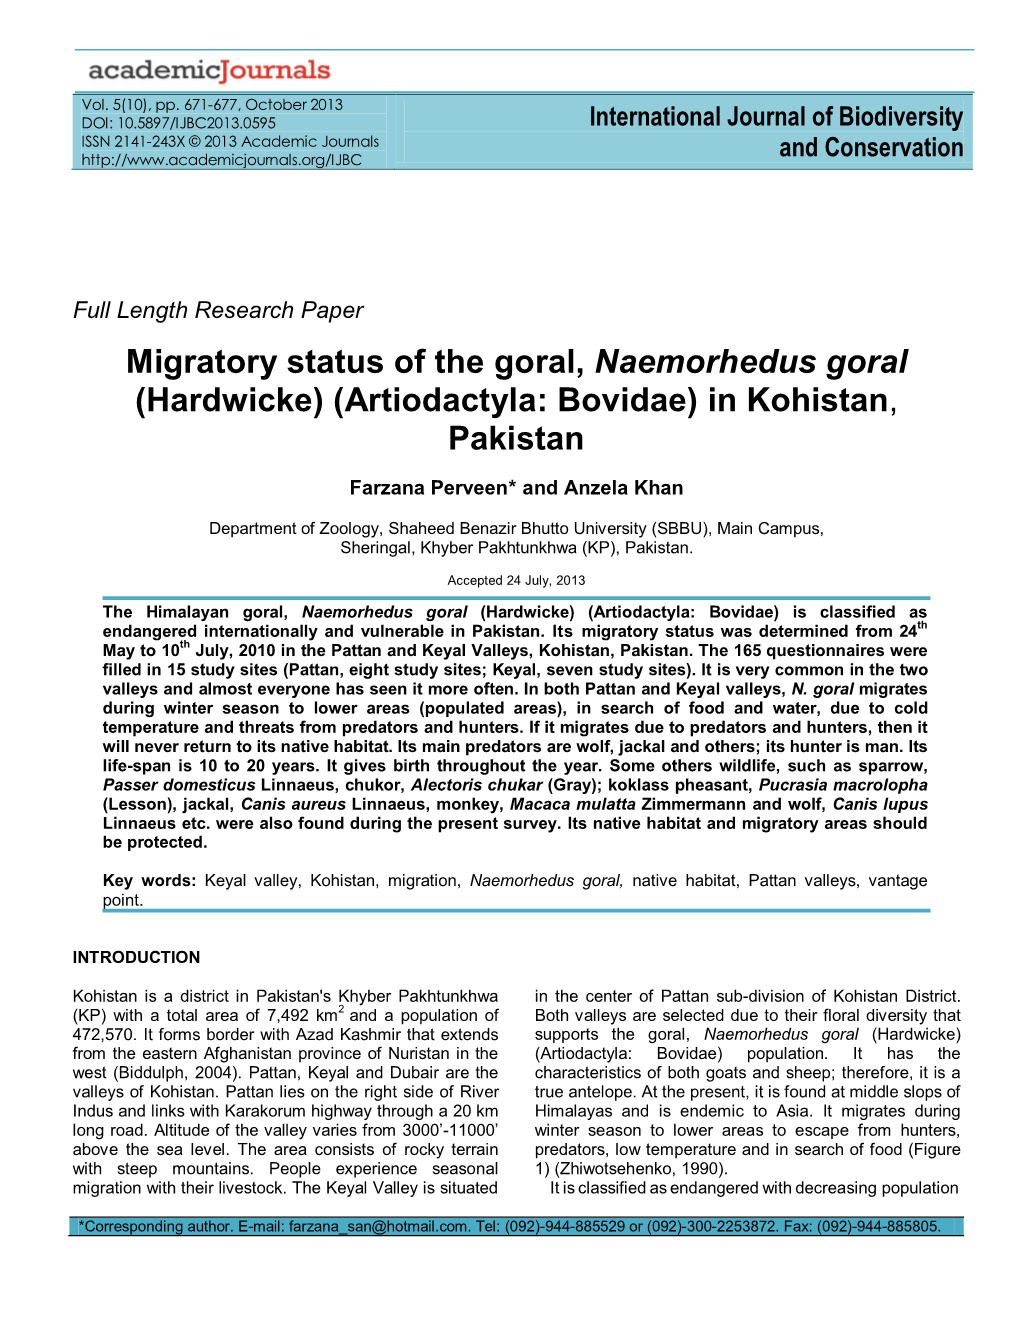 Migratory Status of the Goral, Naemorhedus Goral (Hardwicke) (Artiodactyla: Bovidae) in Kohistan, Pakistan